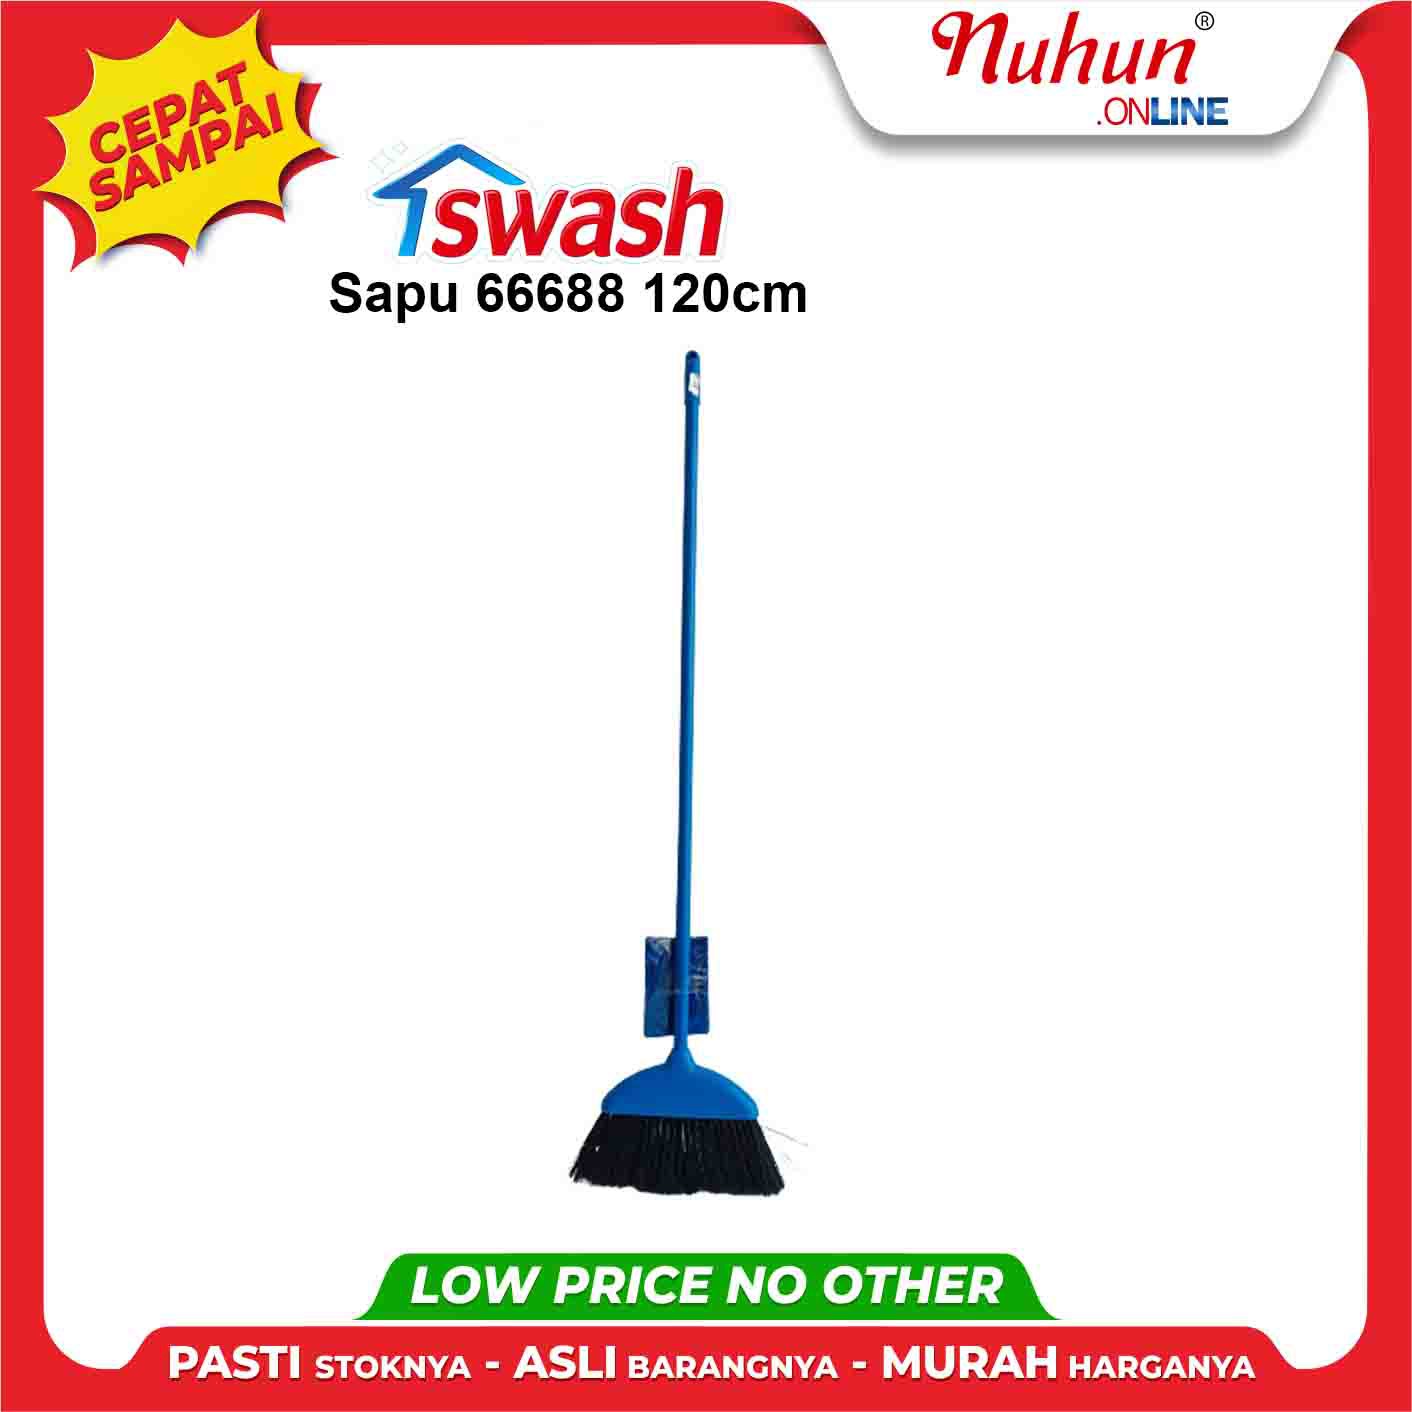 Swash Sapu 66688 120cm